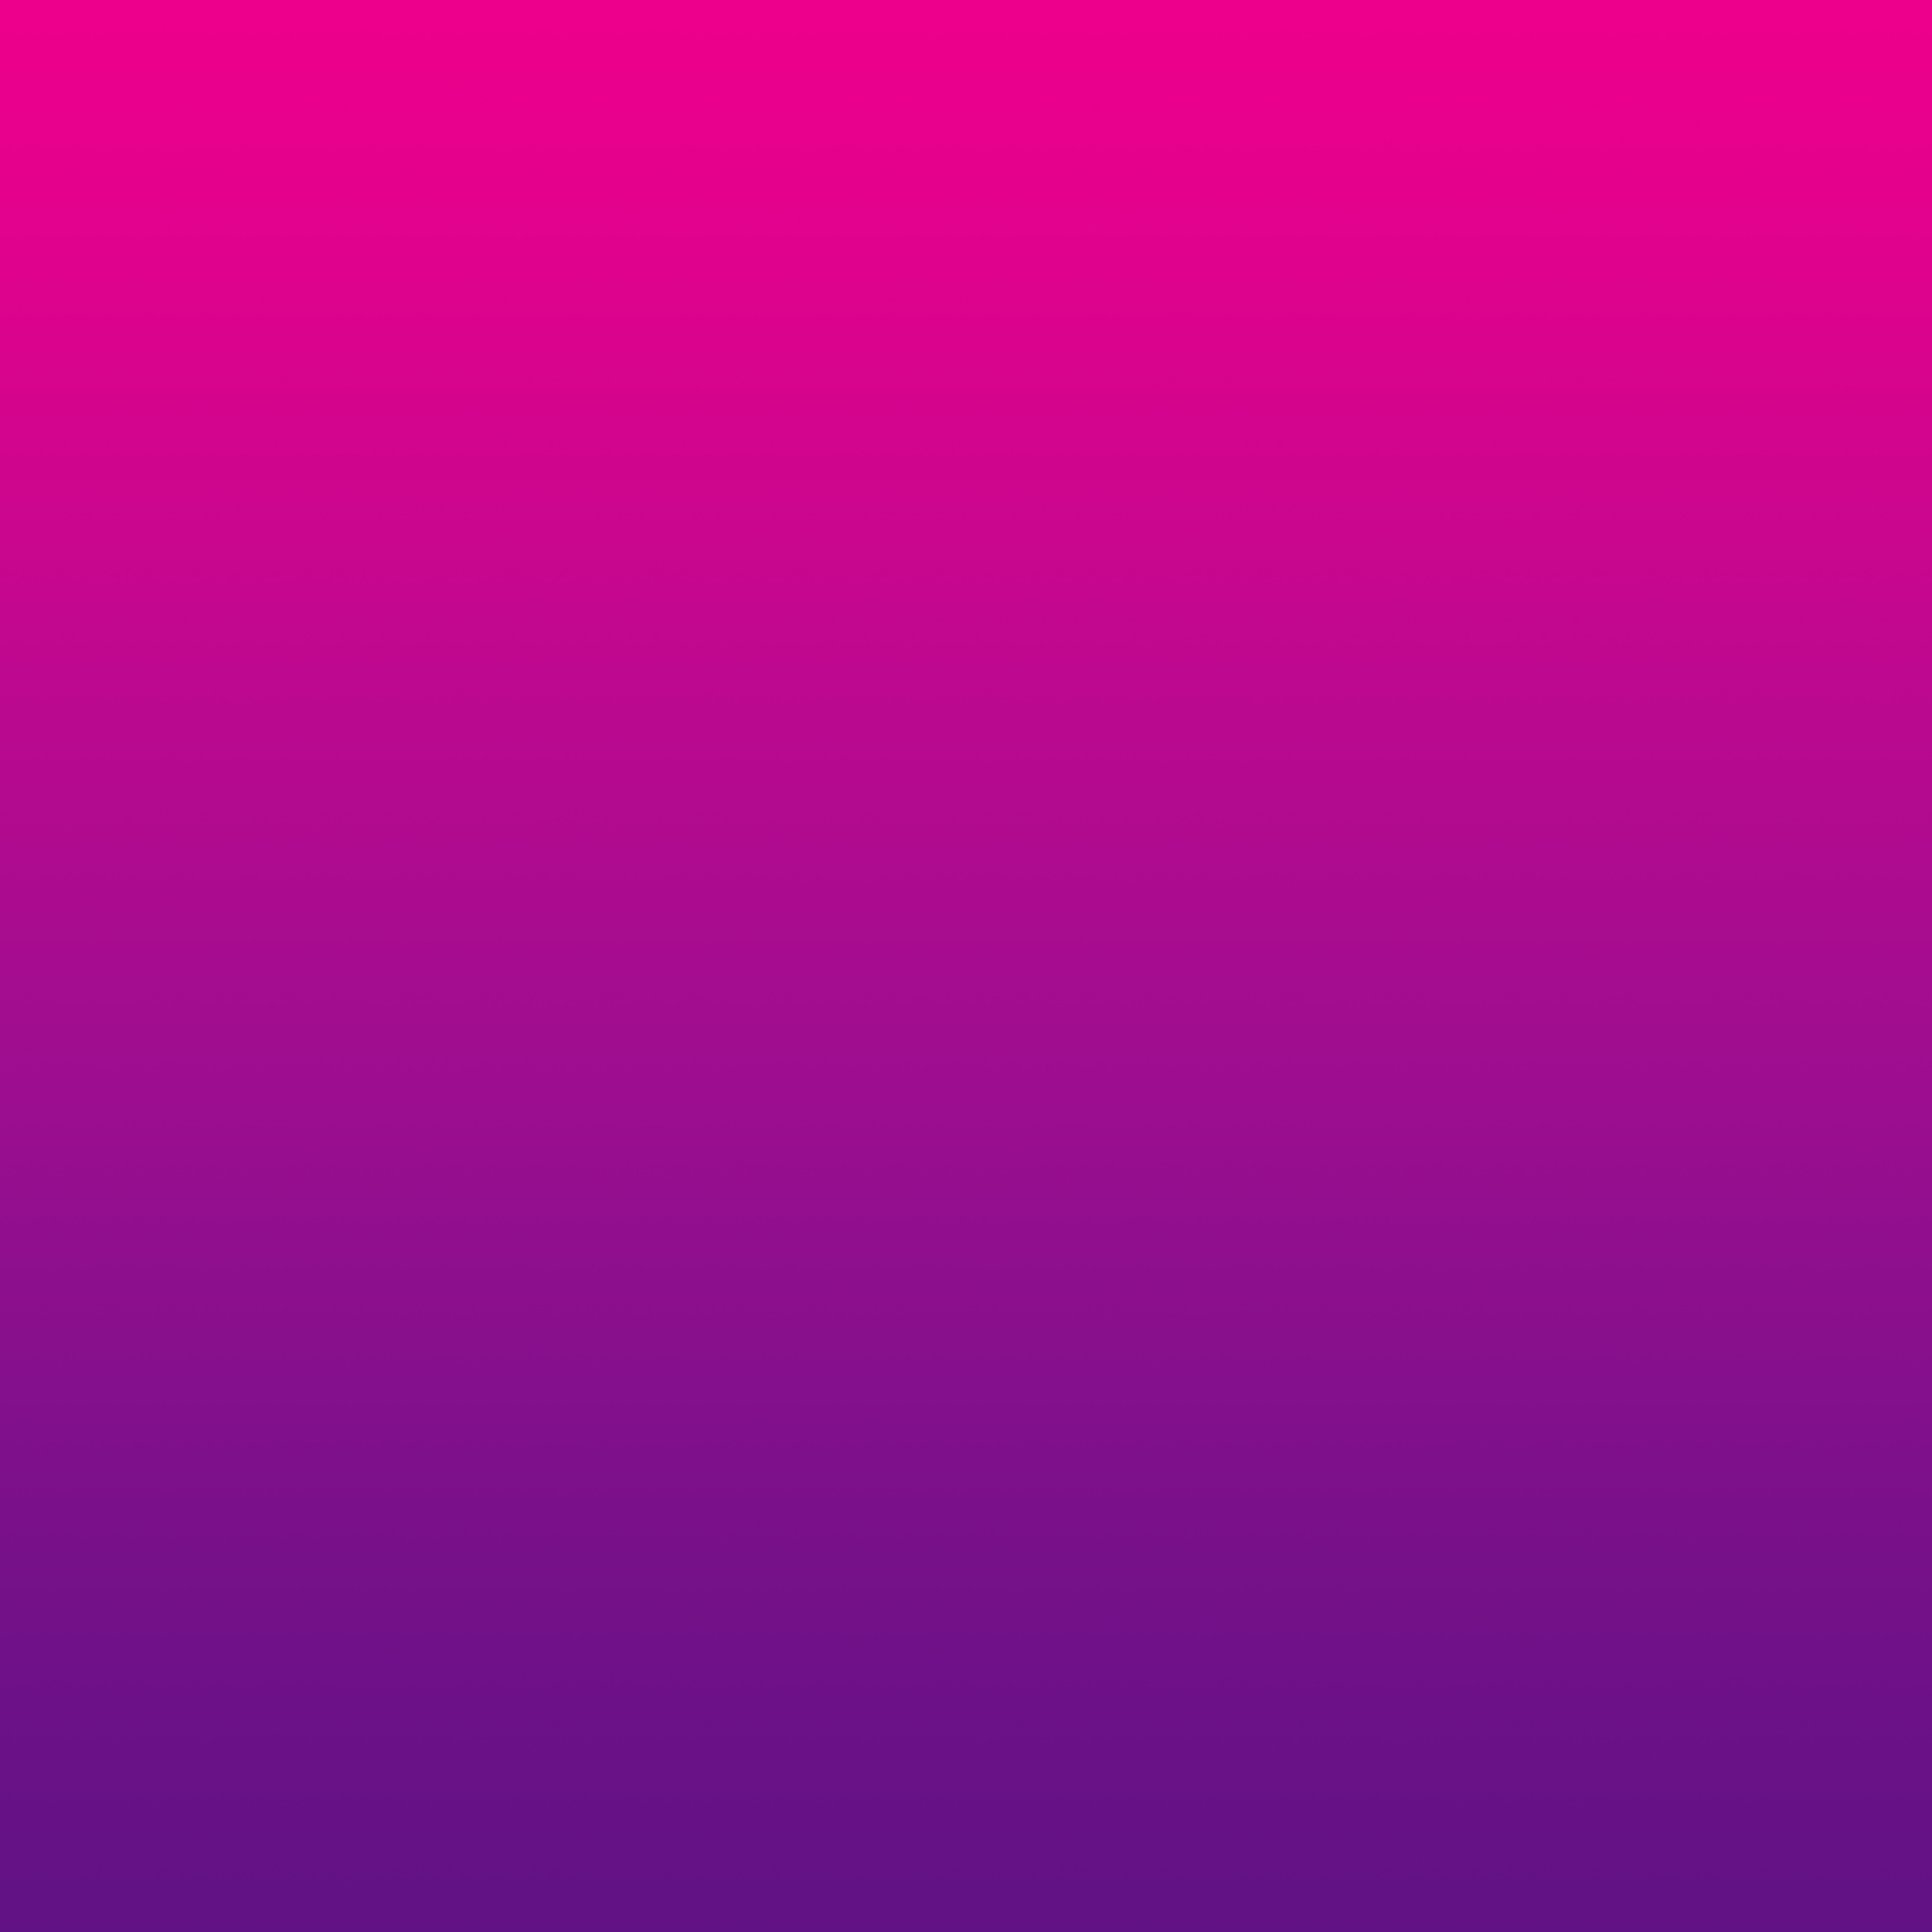 Ombre Neon Purple Violet Gradient Background